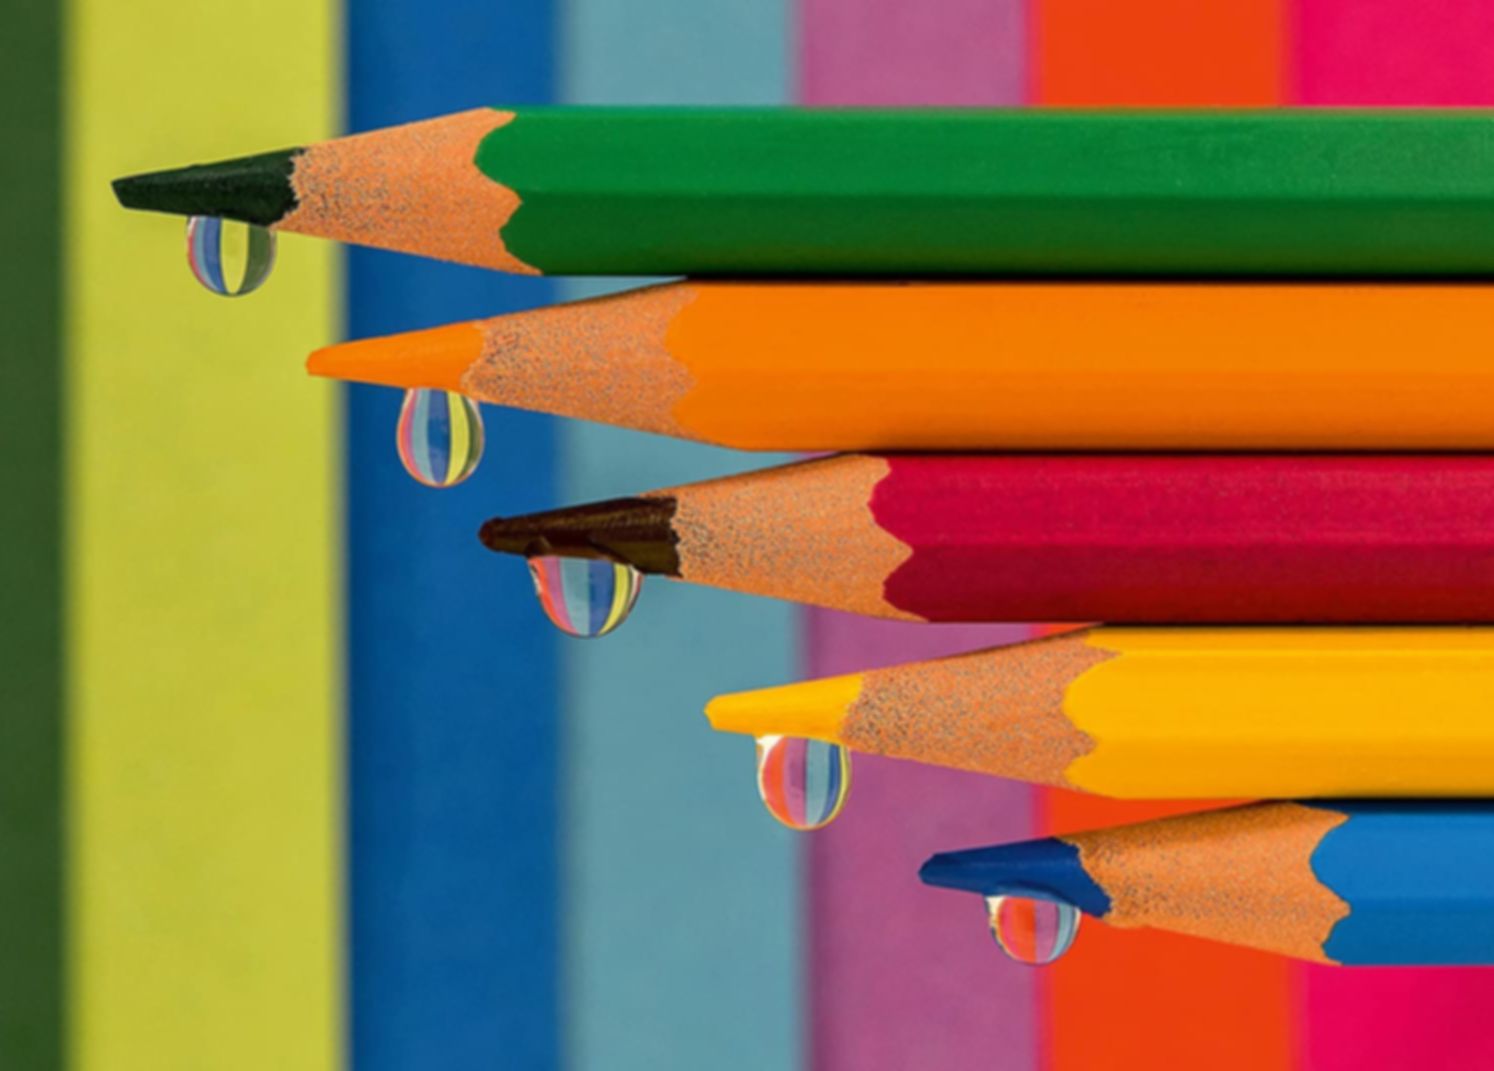 Coloured pencils